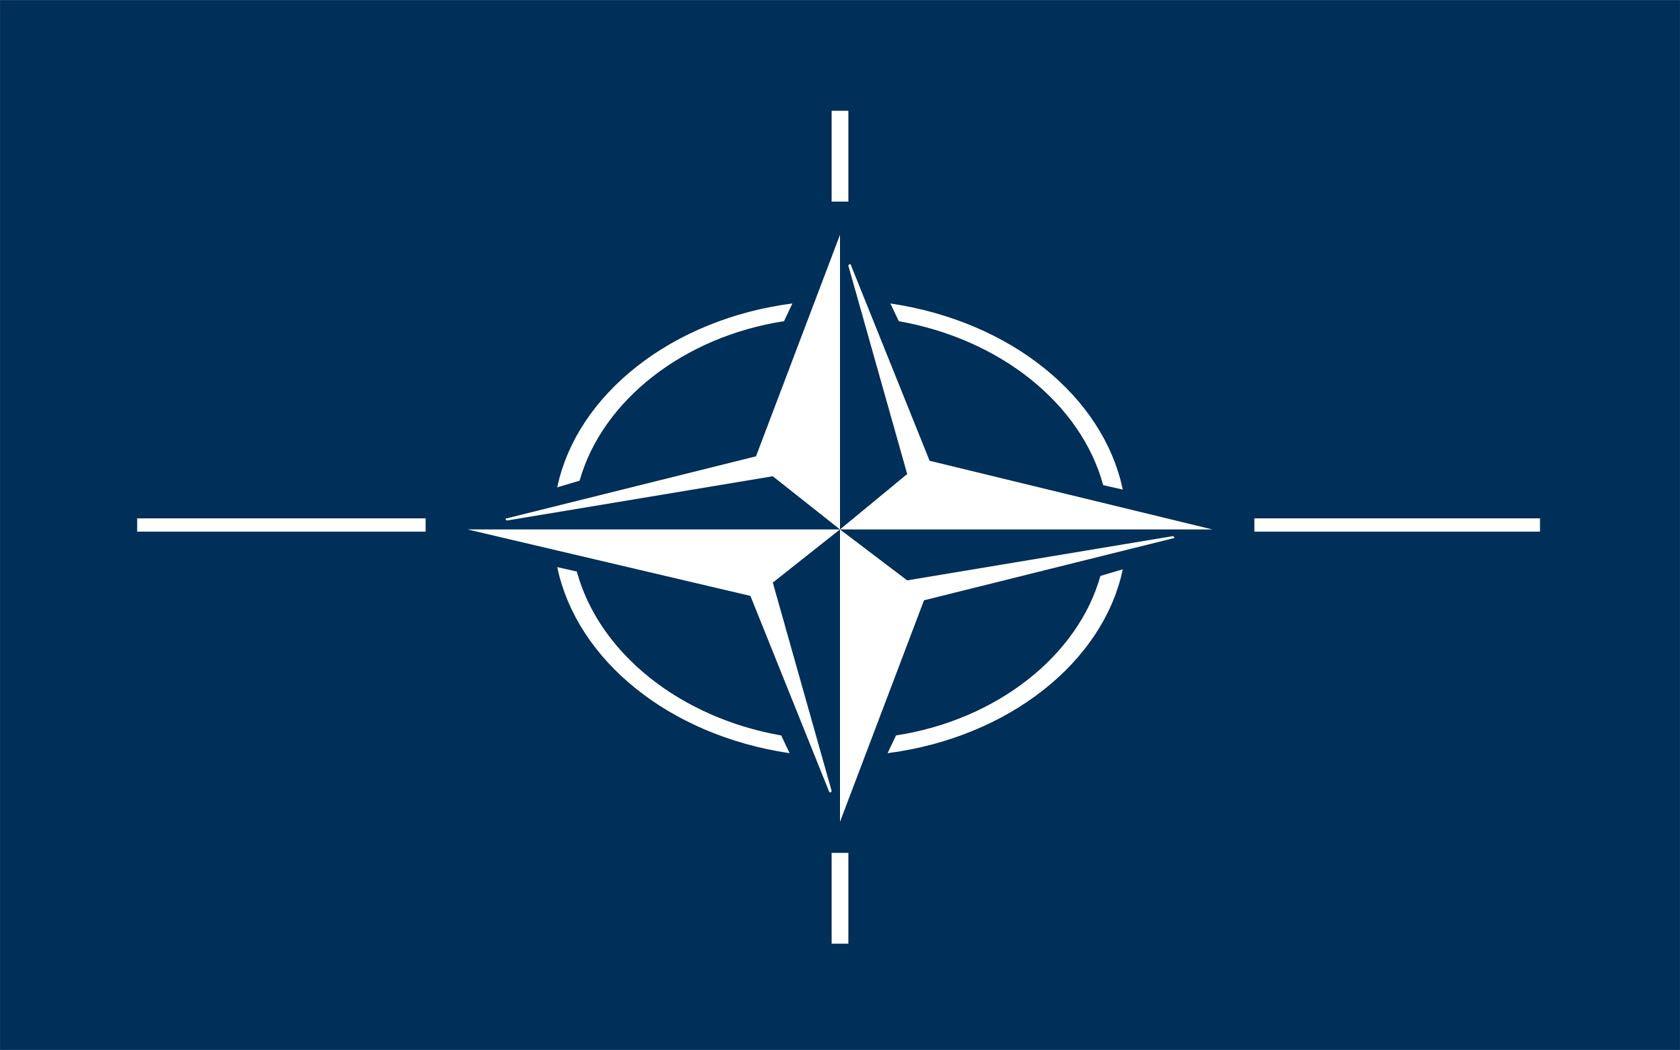 NATO wallpaper